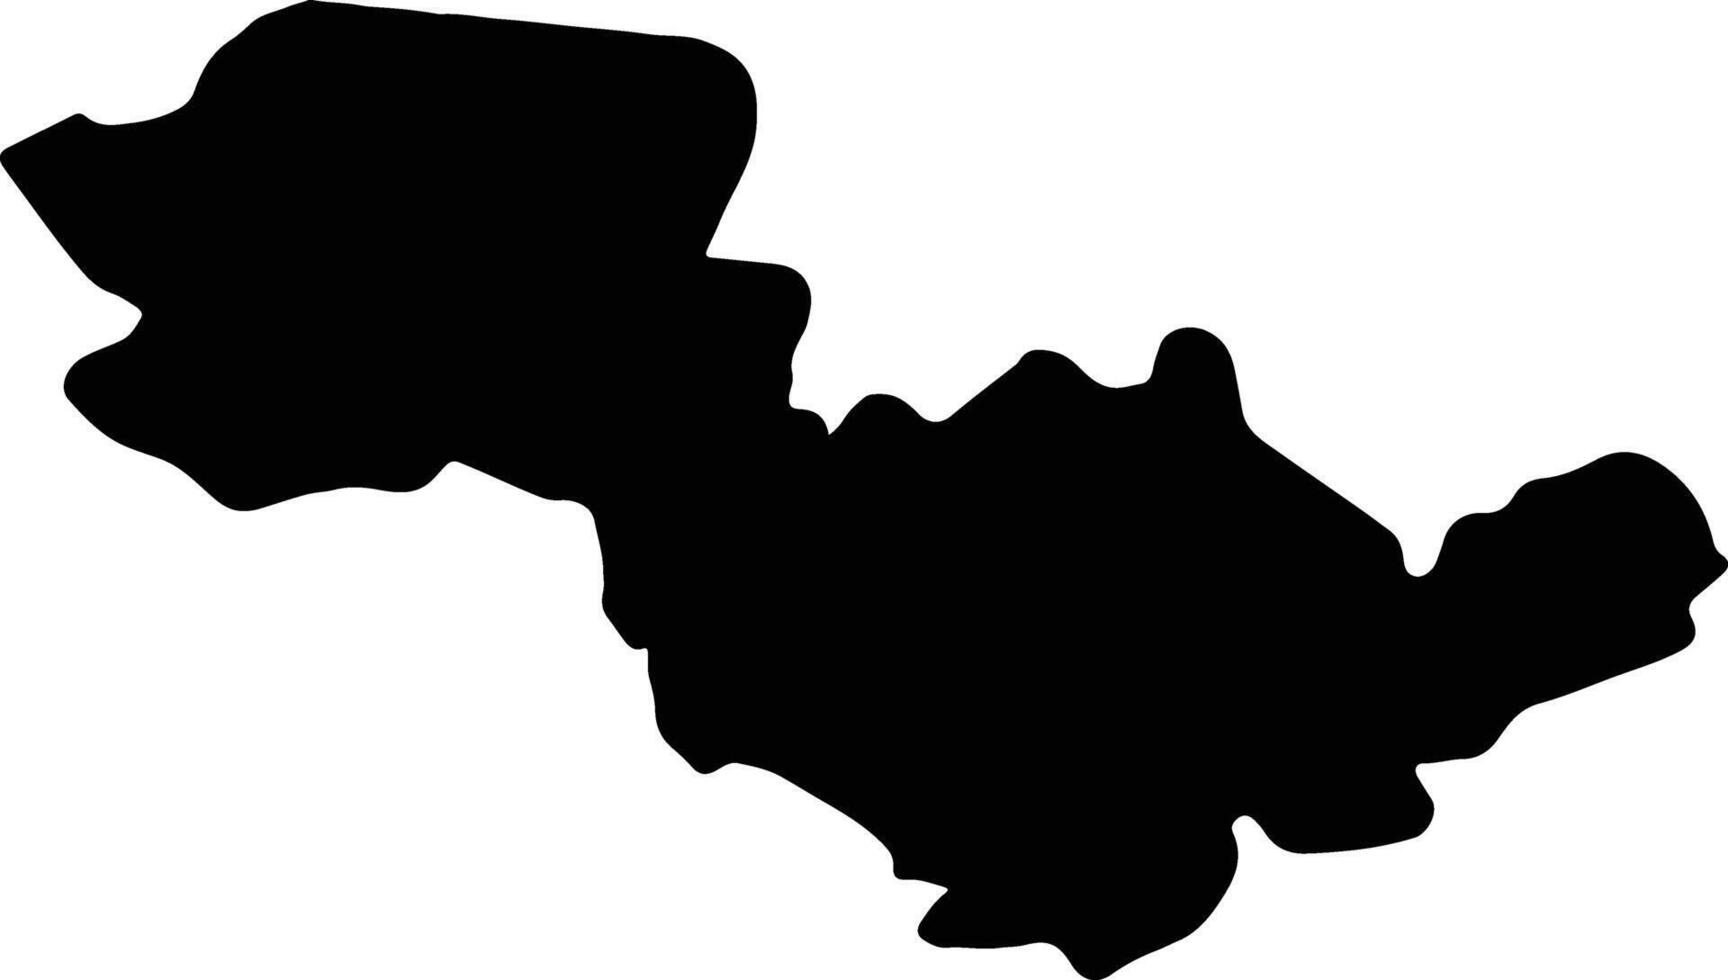 Terni Italy silhouette map vector